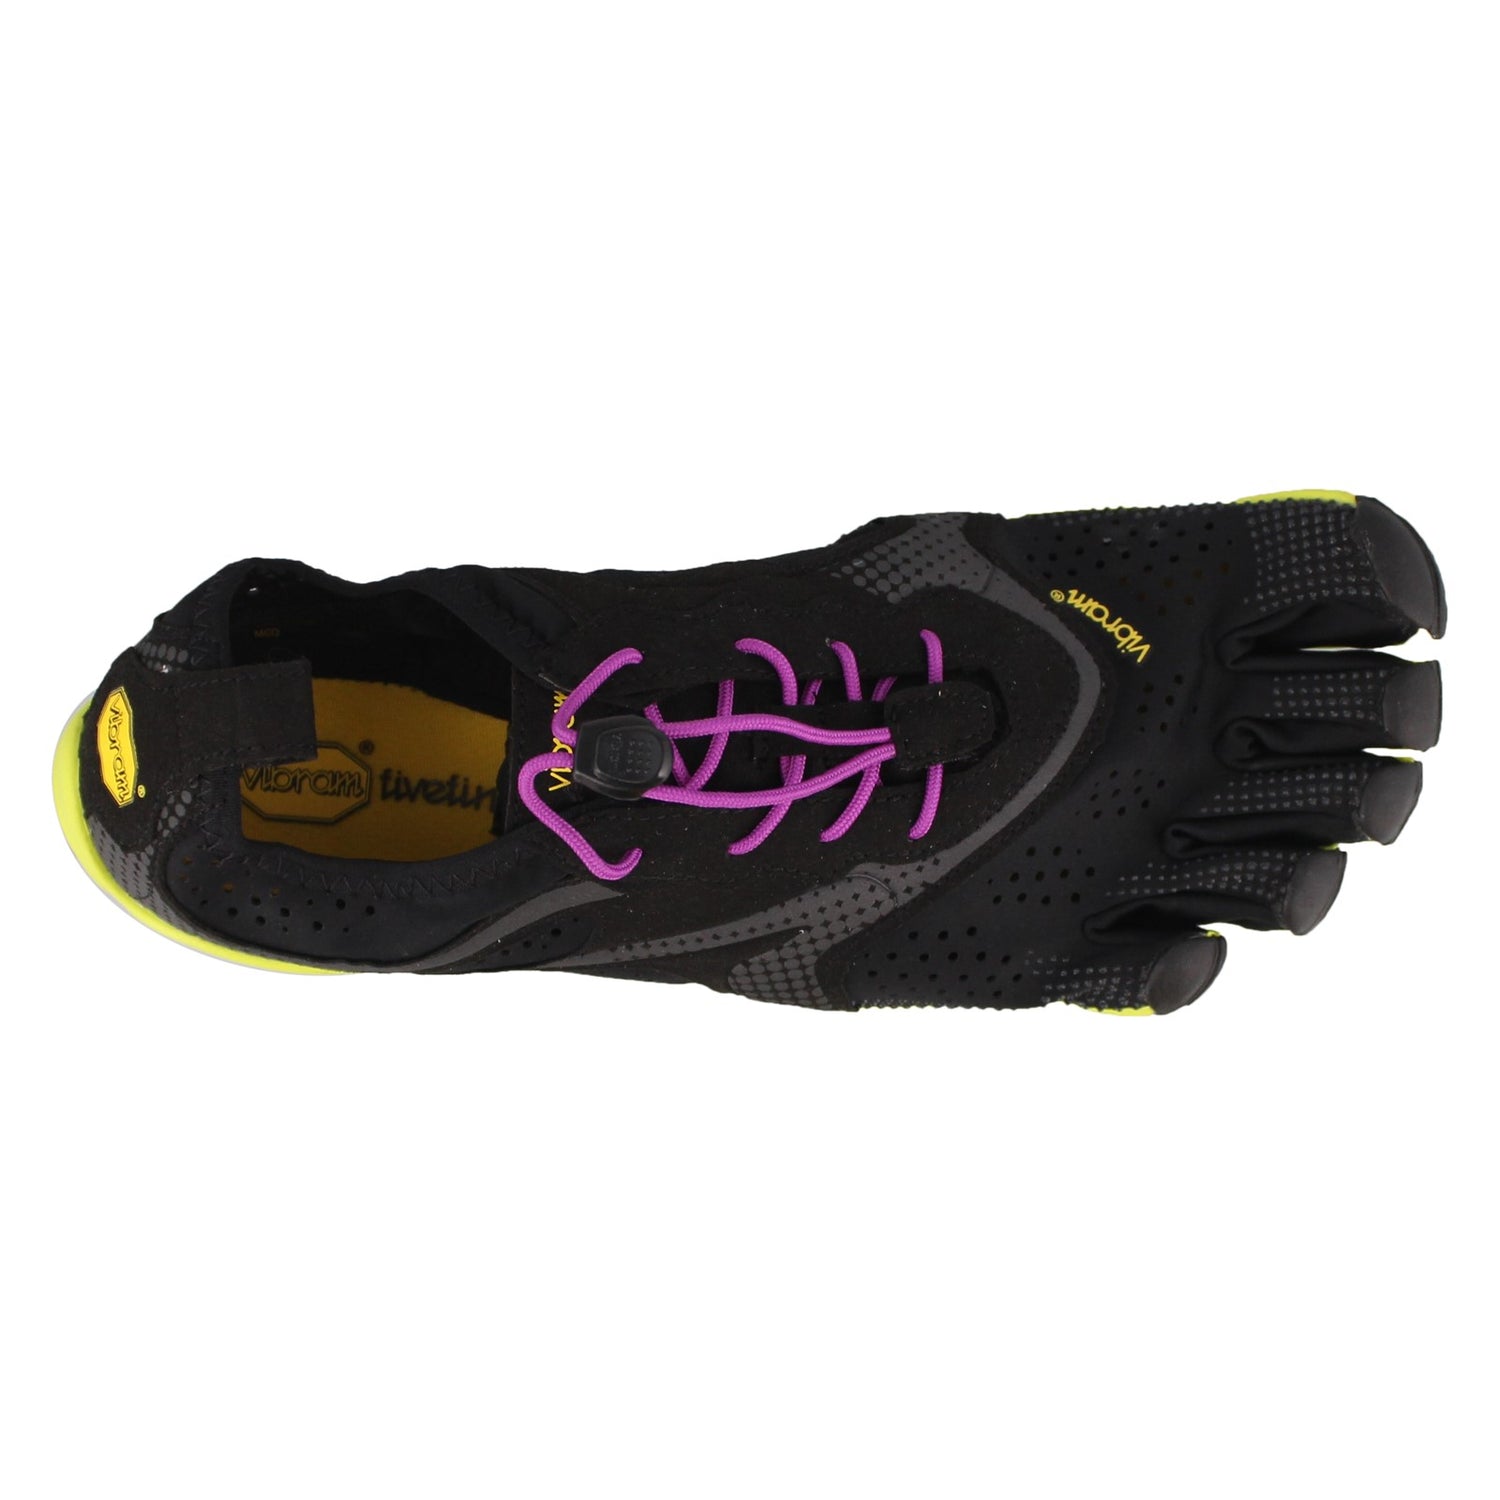 Peltz Shoes  Women's Vibram FiveFingers V- Run Running Shoe BLACK YELLOW 16W3105